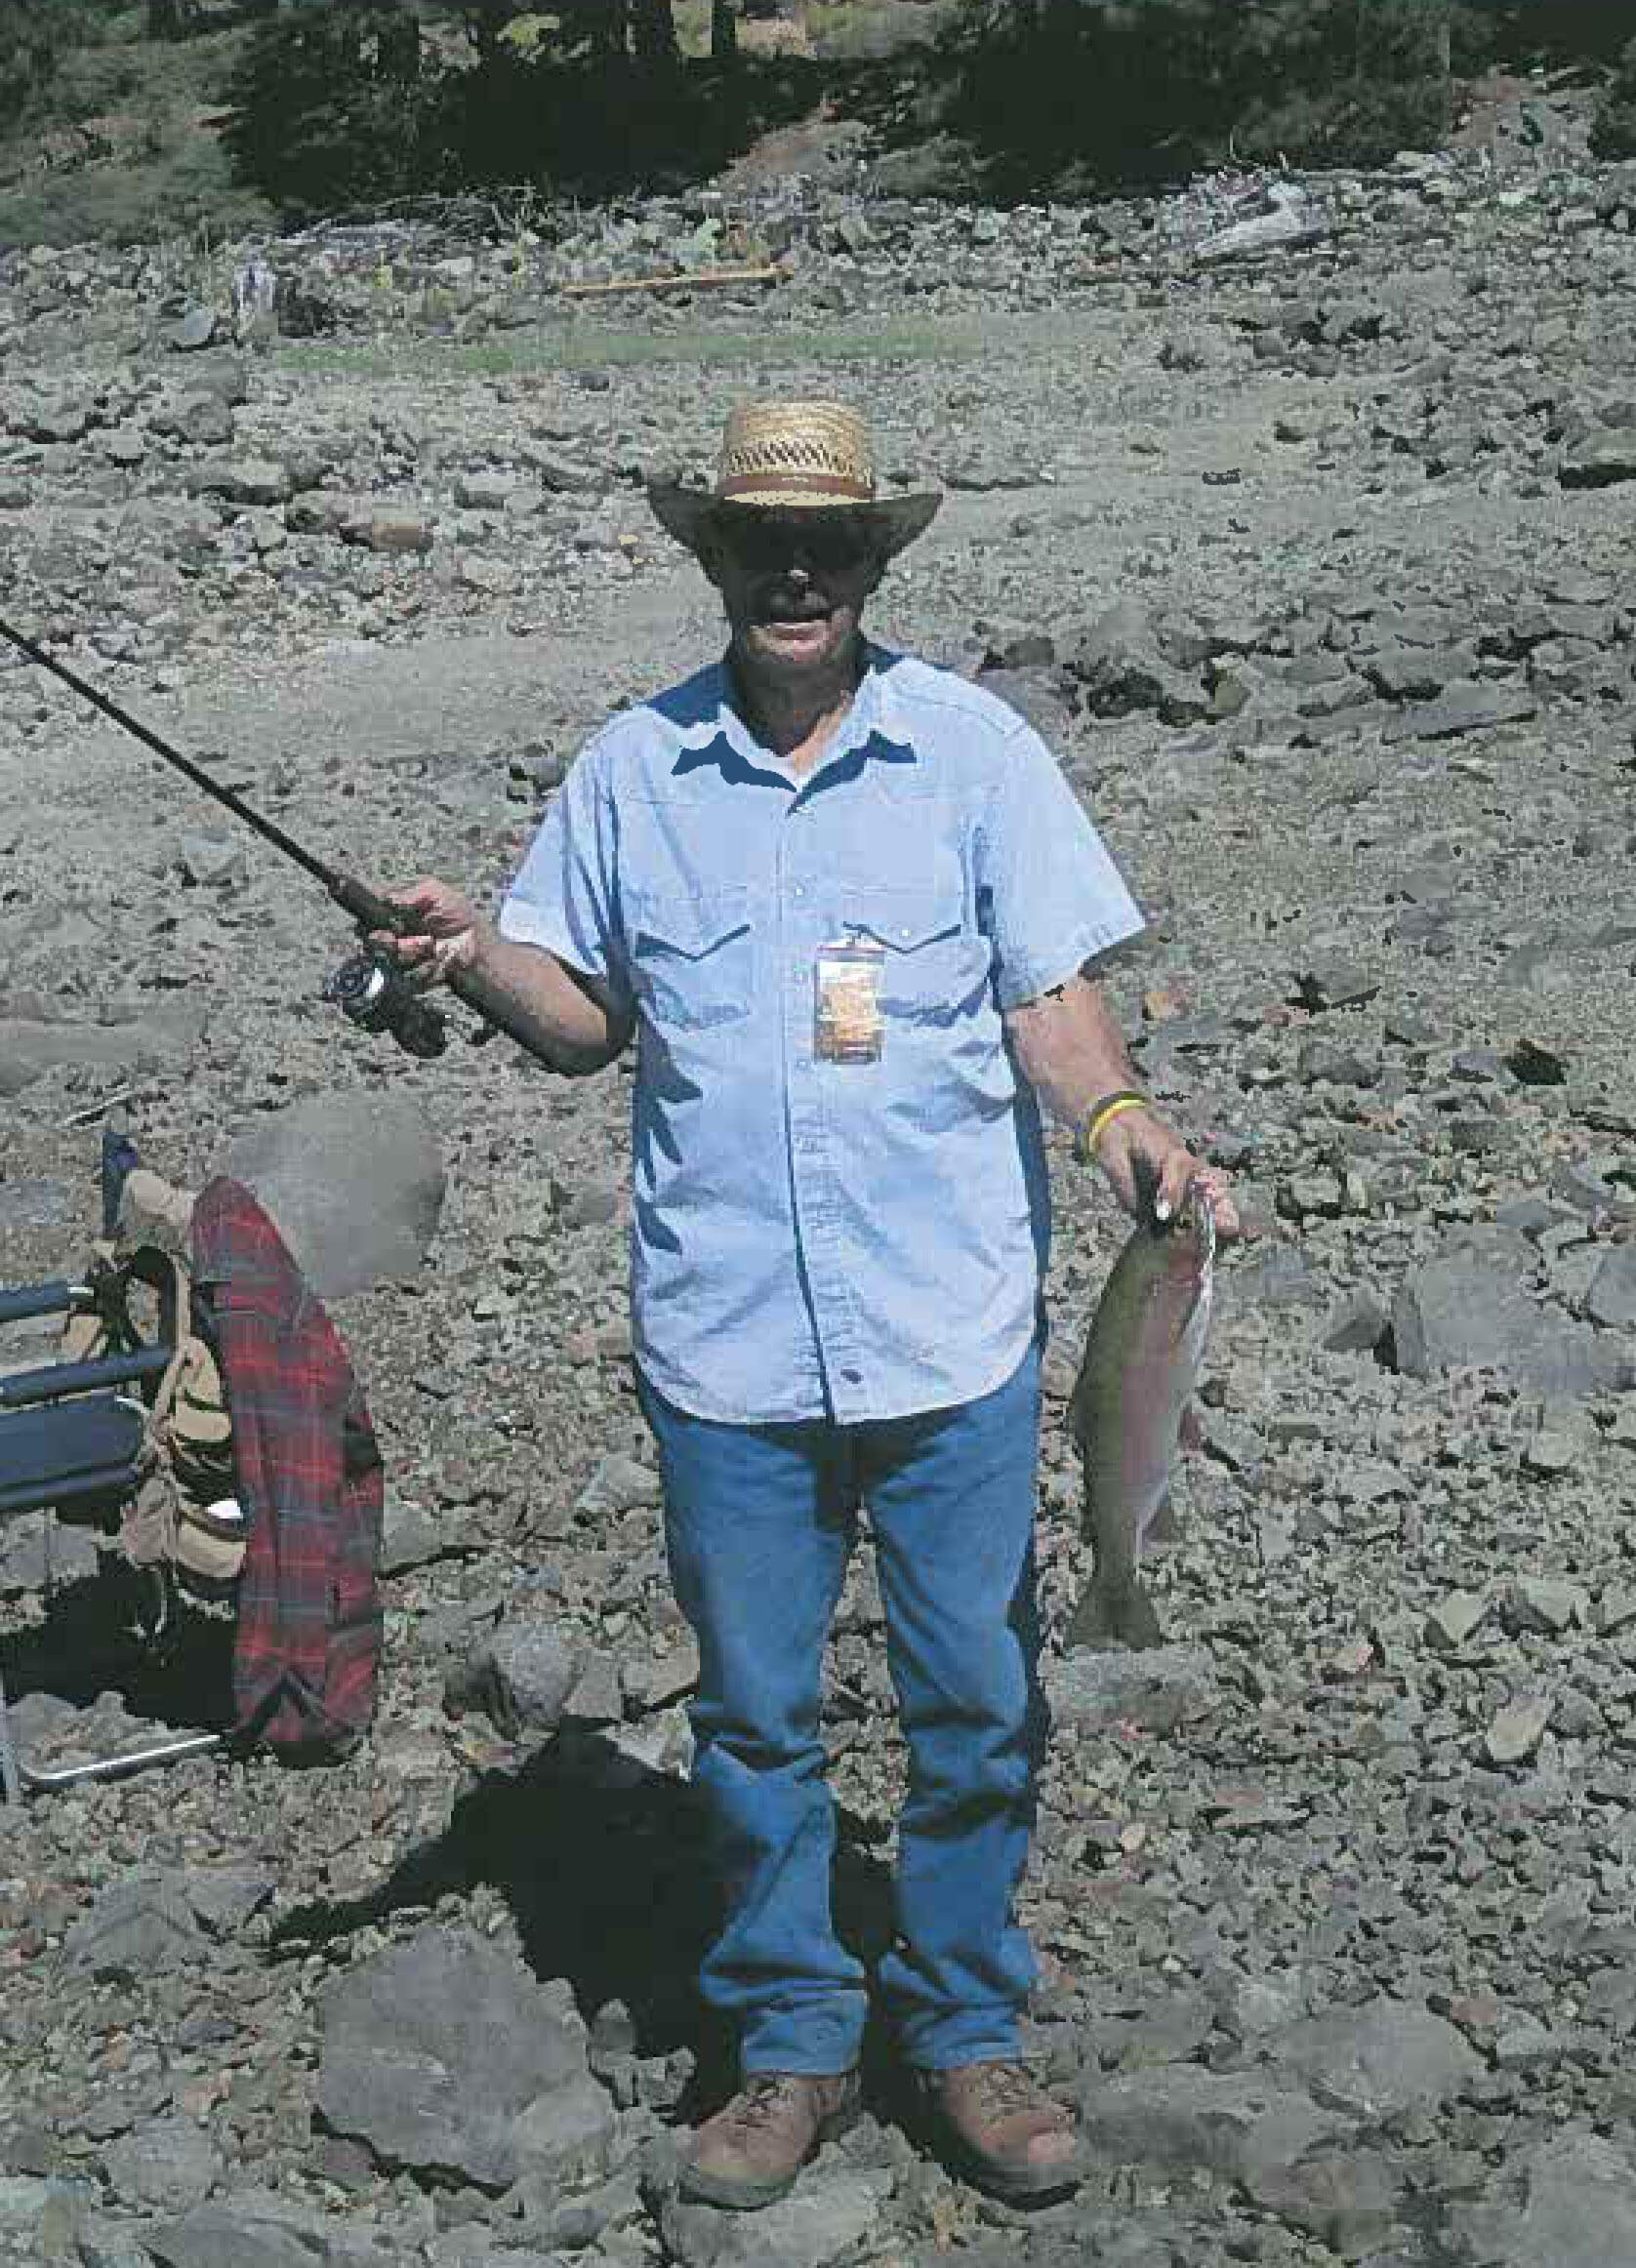 Bill Haymart fishing